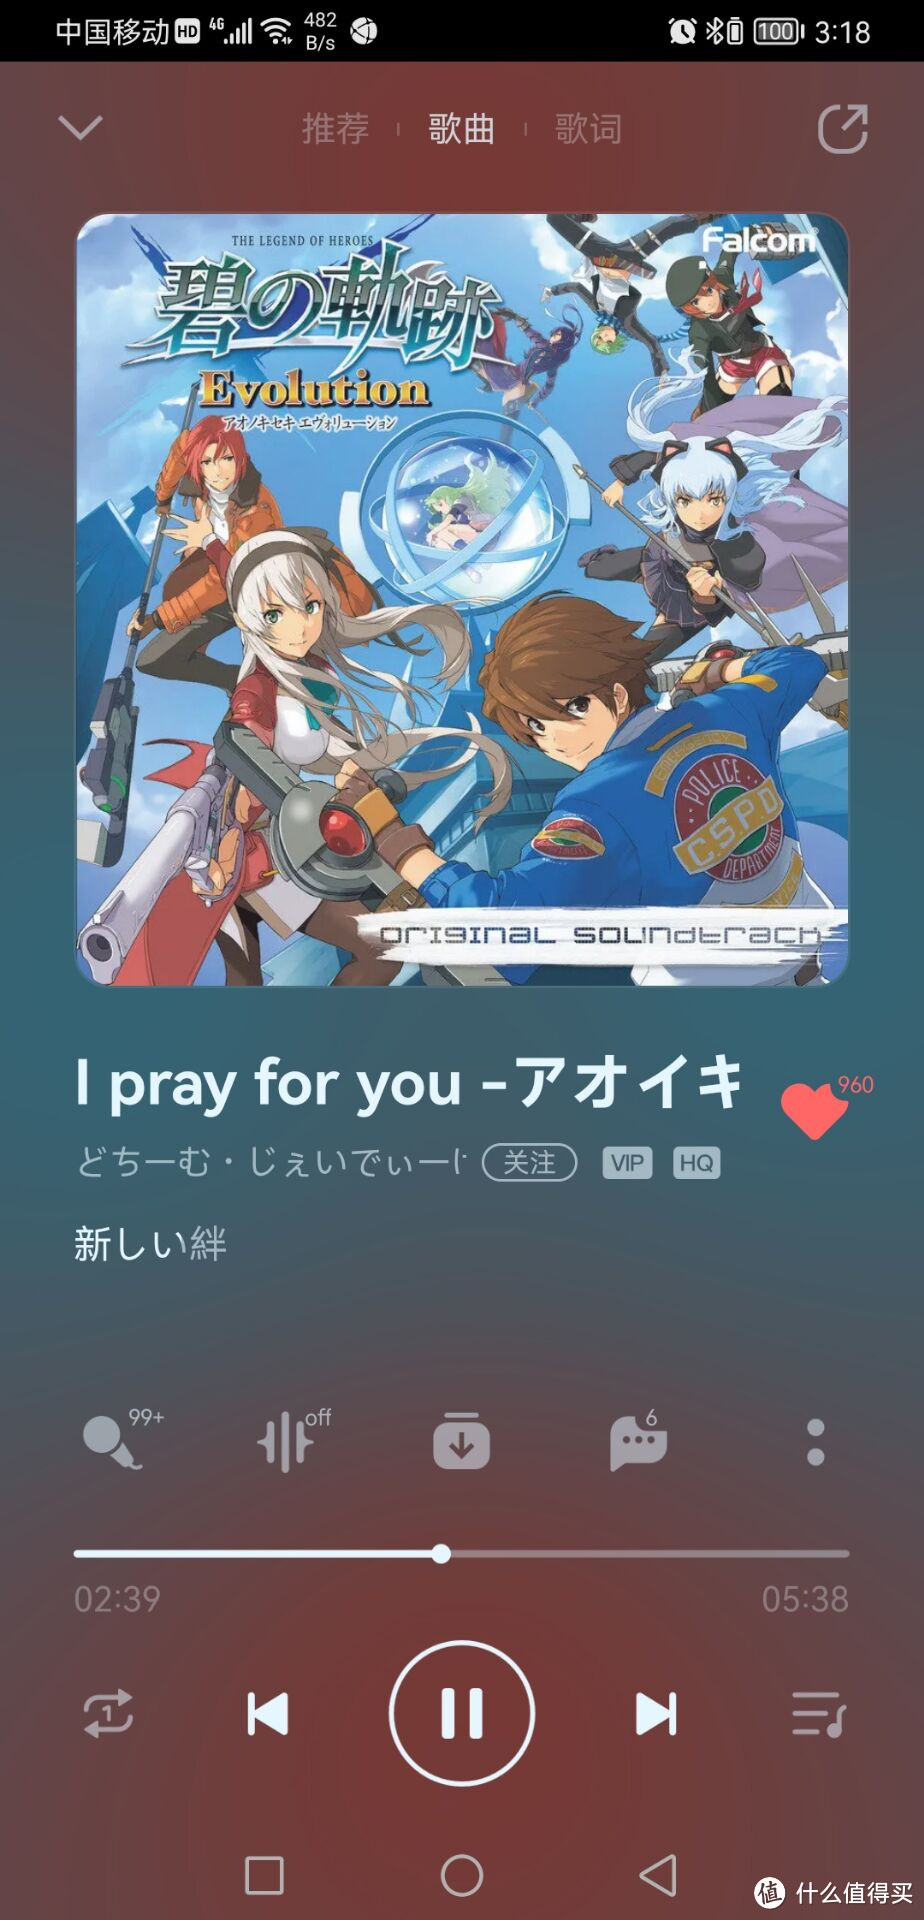 I pray for you -アオイキセキ-